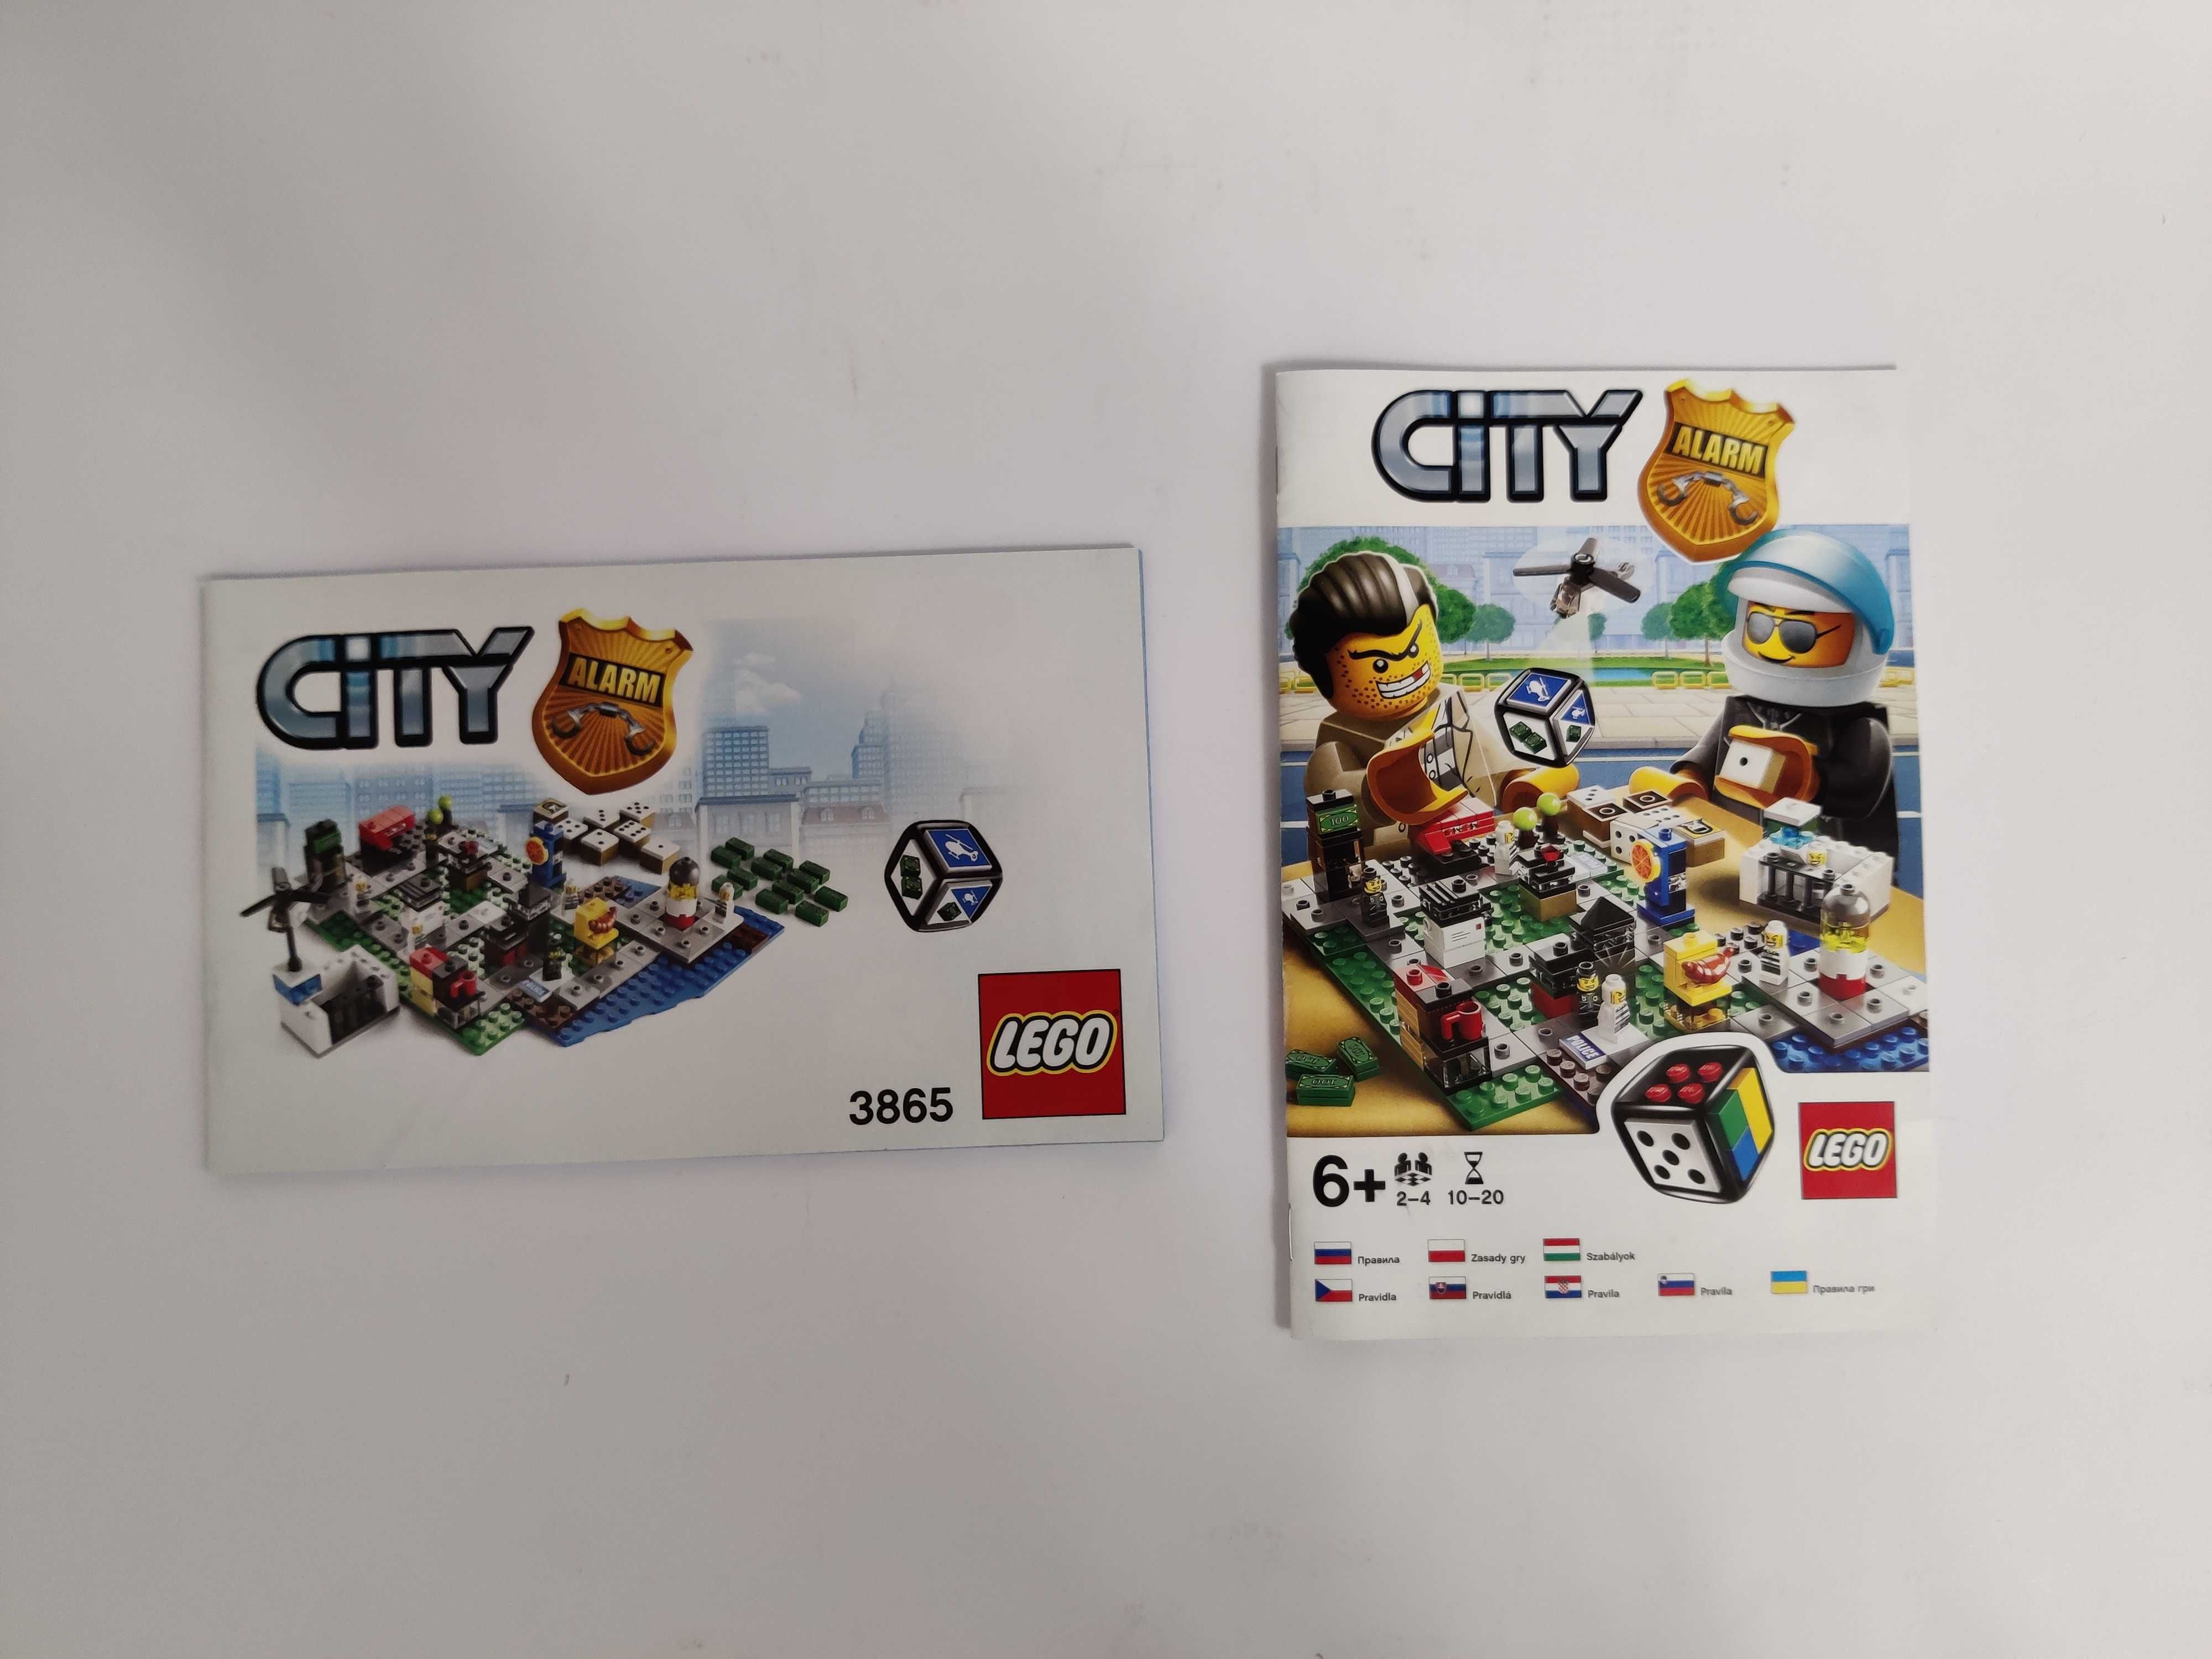 LEGO City Alarm Gra 3865